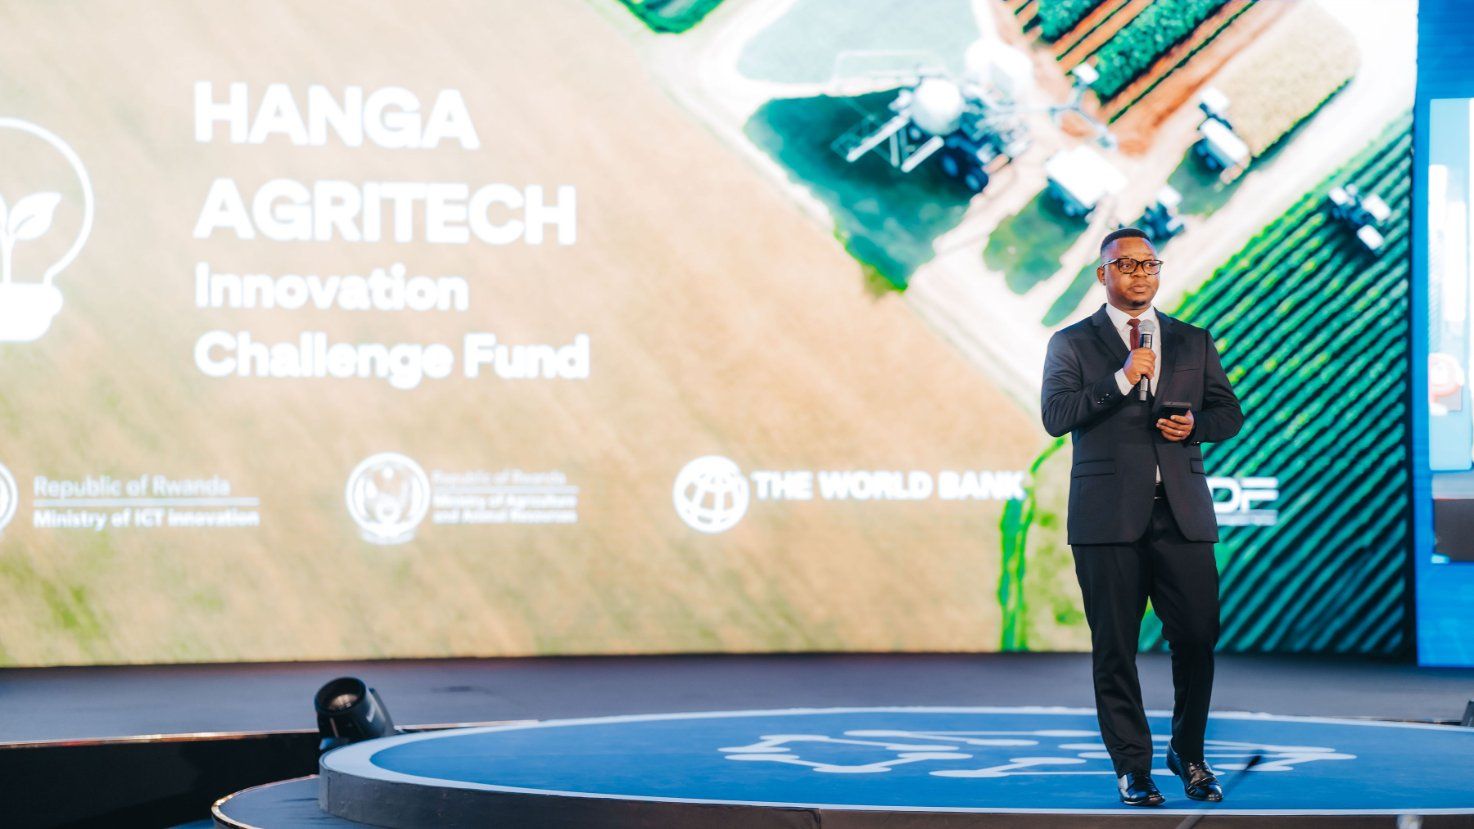 Rwanda's Agro Tech Revolution: Launching the Hanga Agritech Innovation Challenge Fund